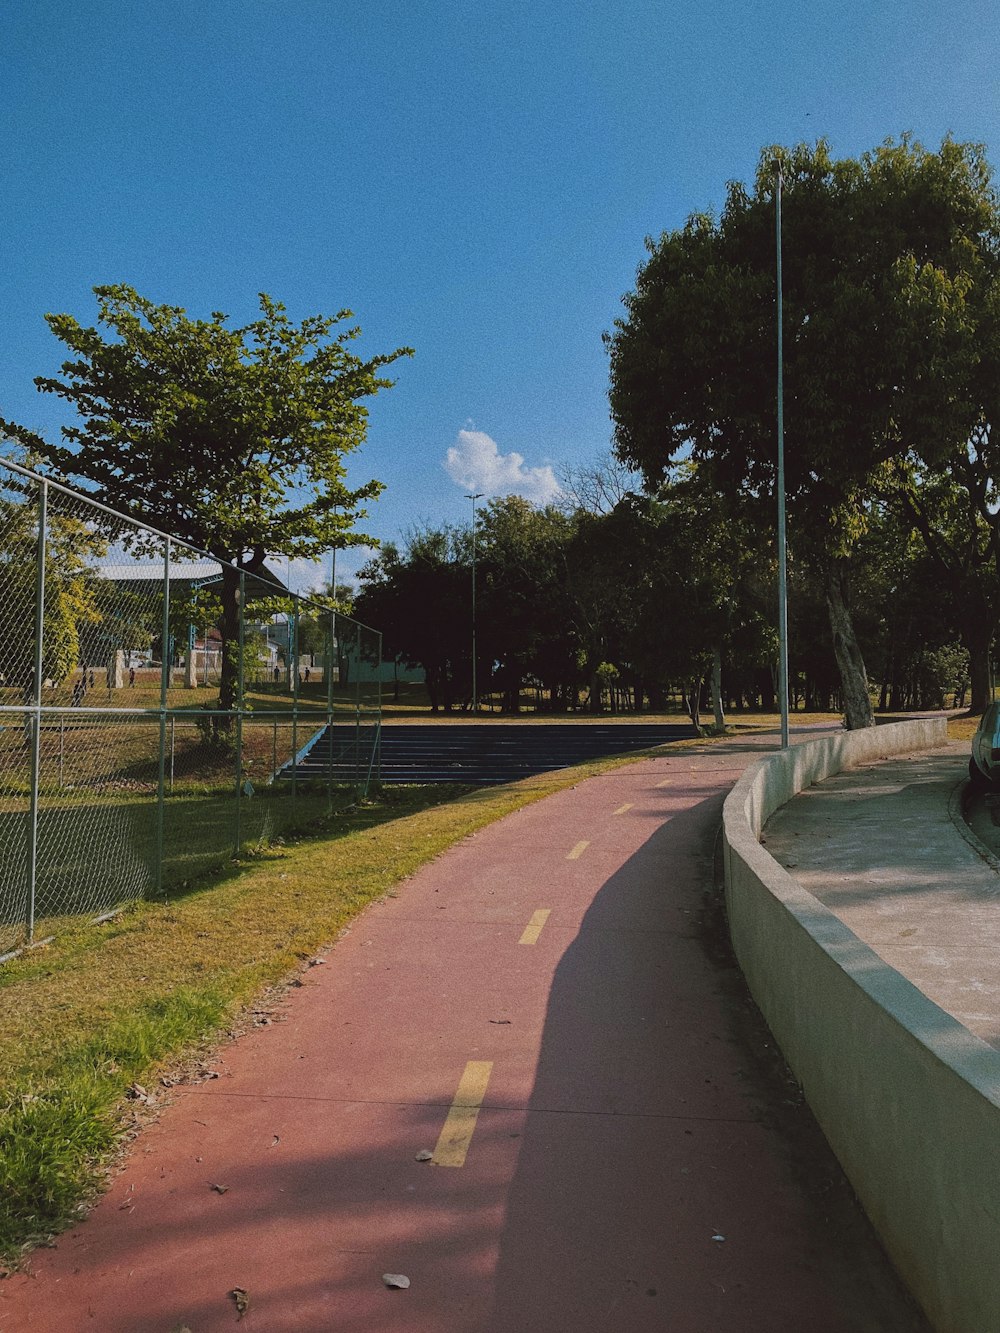 a man riding a skateboard down a street next to a fence